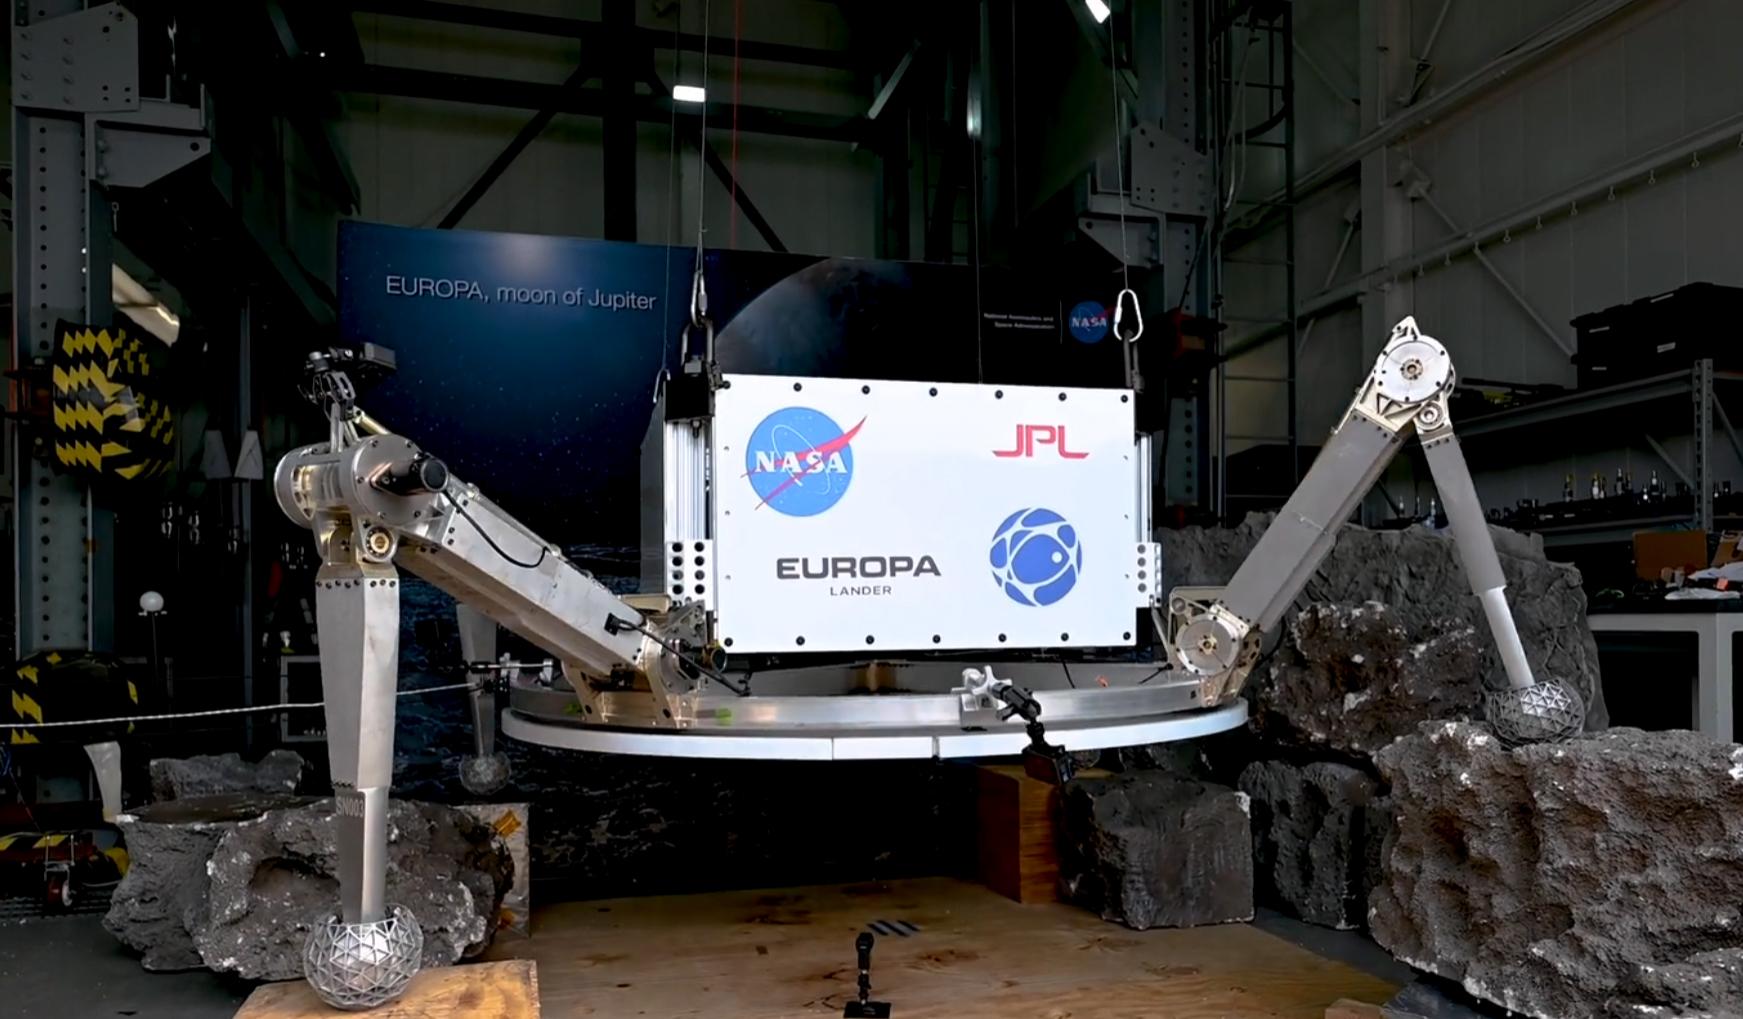 NASA’s Prototype Europa Lander Successfully Tested